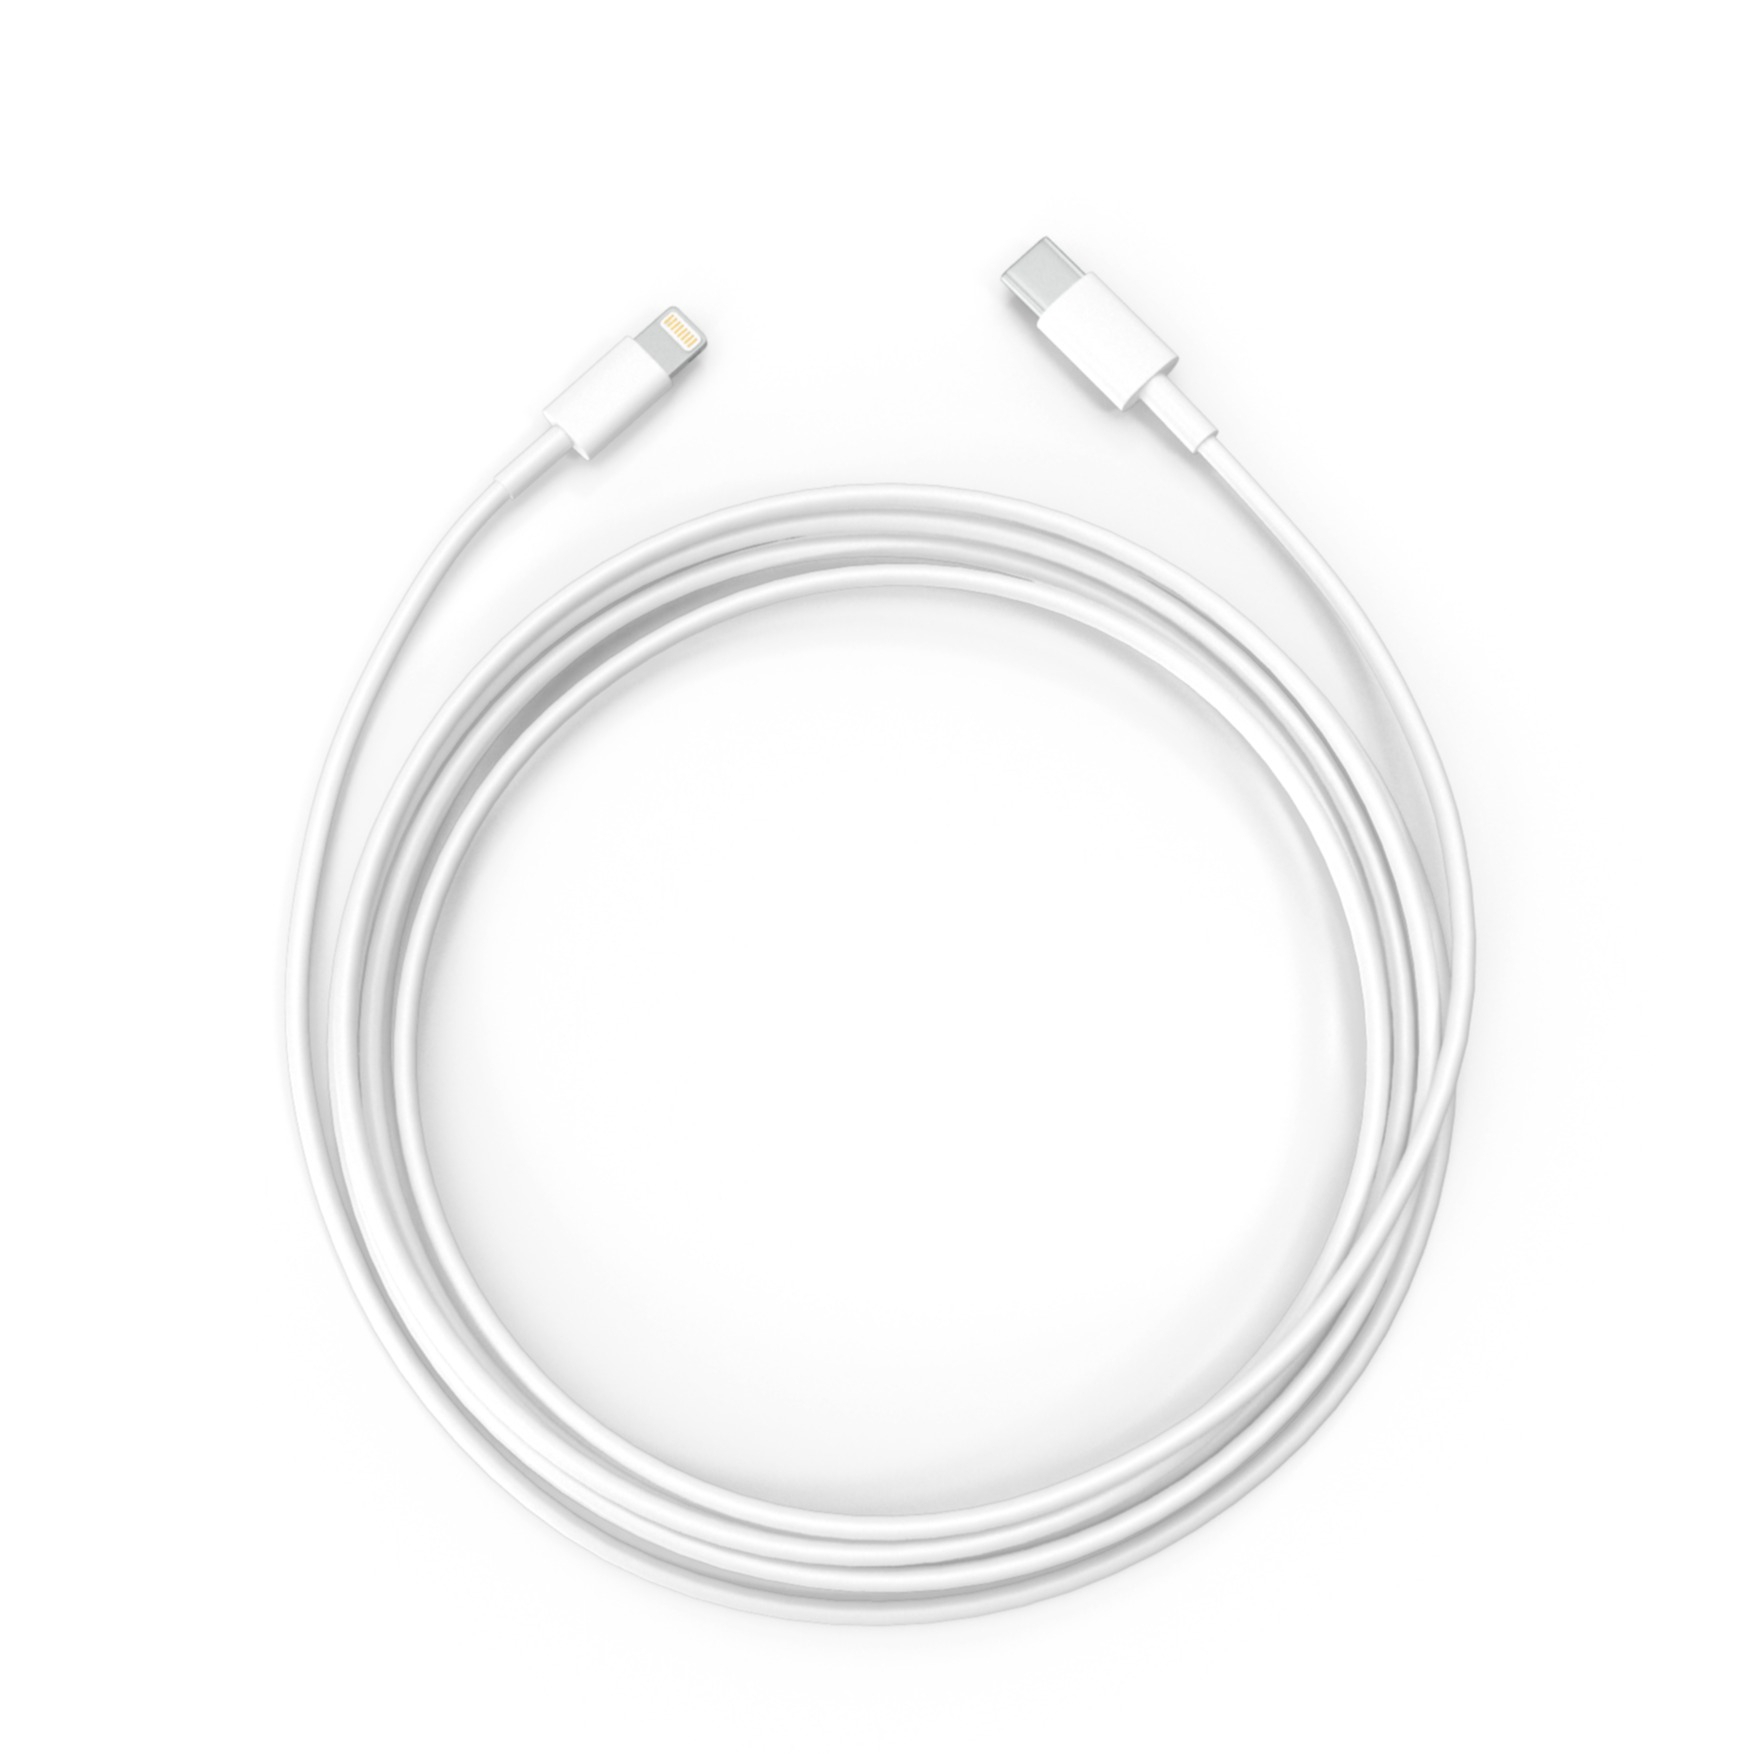 Image of Apple - (1m) iPhone 12 Pro Lightning auf USB C Ladekabel Datenkabel MK0X2ZM/A - Weiss bei Apfelkiste.ch